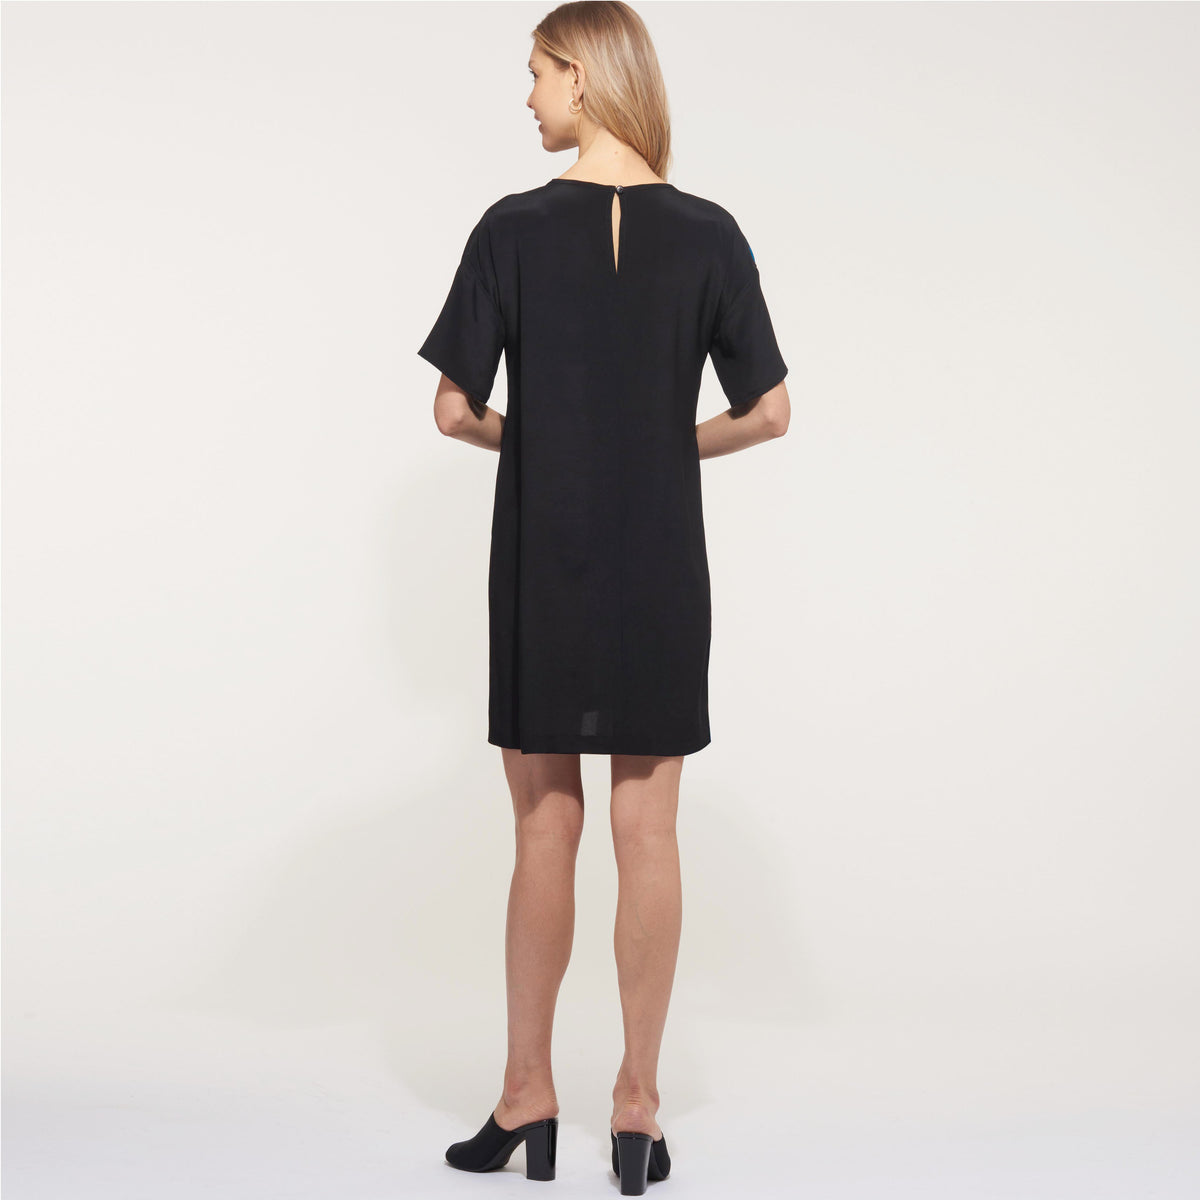 6596 New Look Sewing Pattern N6596 Misses' Asymmetrical Dress